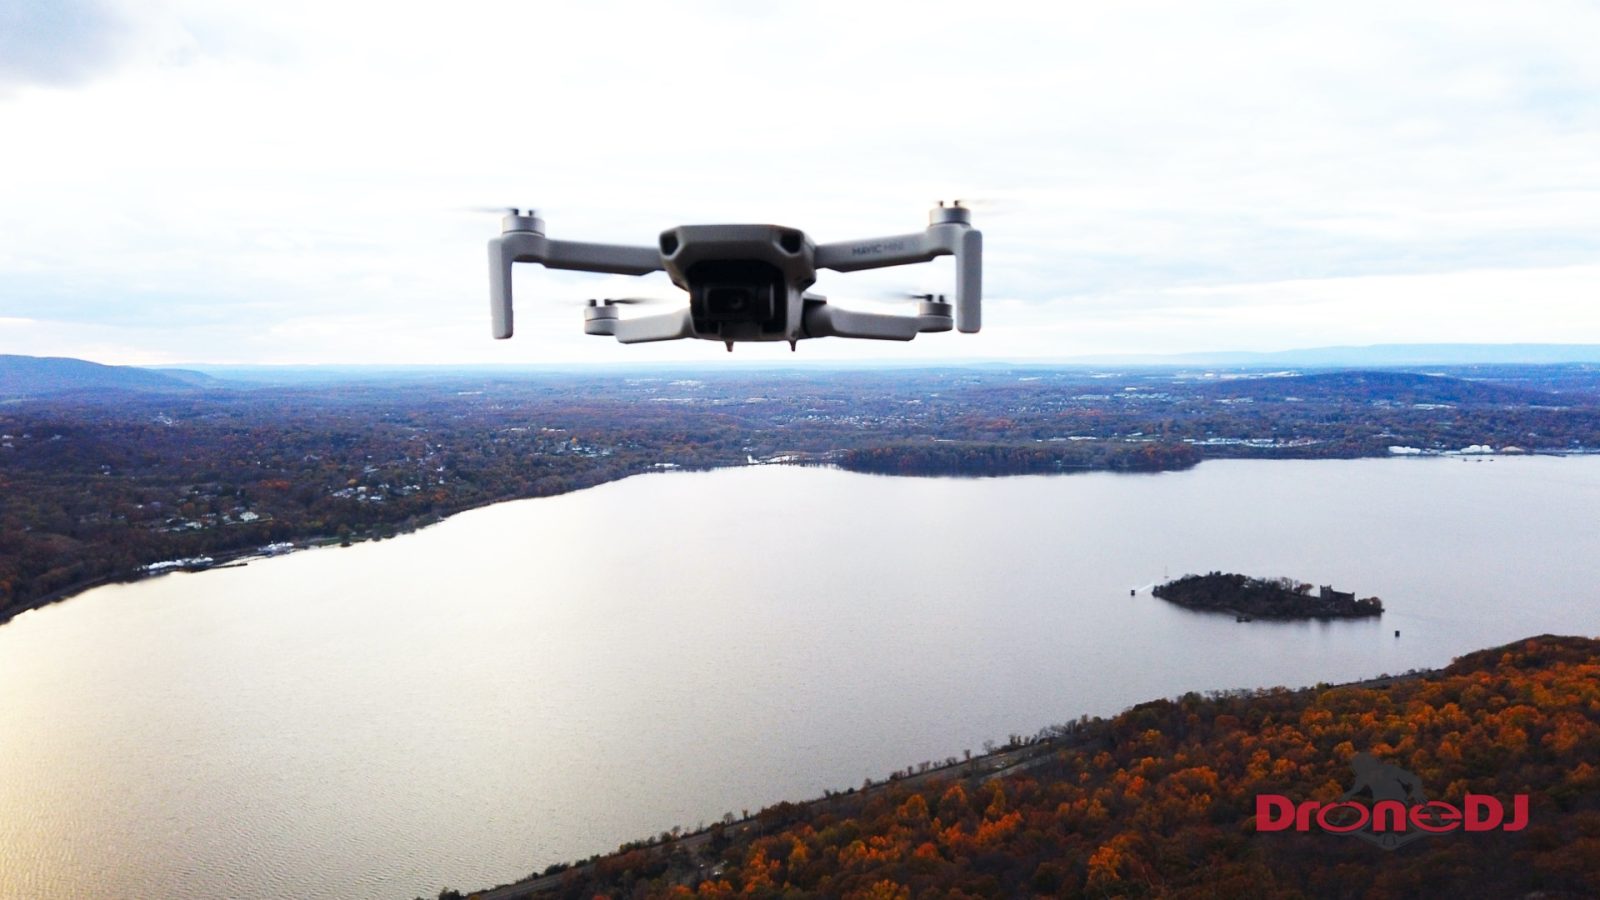 DJI-Mavic-Mini-long-distance-range-test.-Mini-drone-reaches-2.4-miles-on-WiFi.jpg